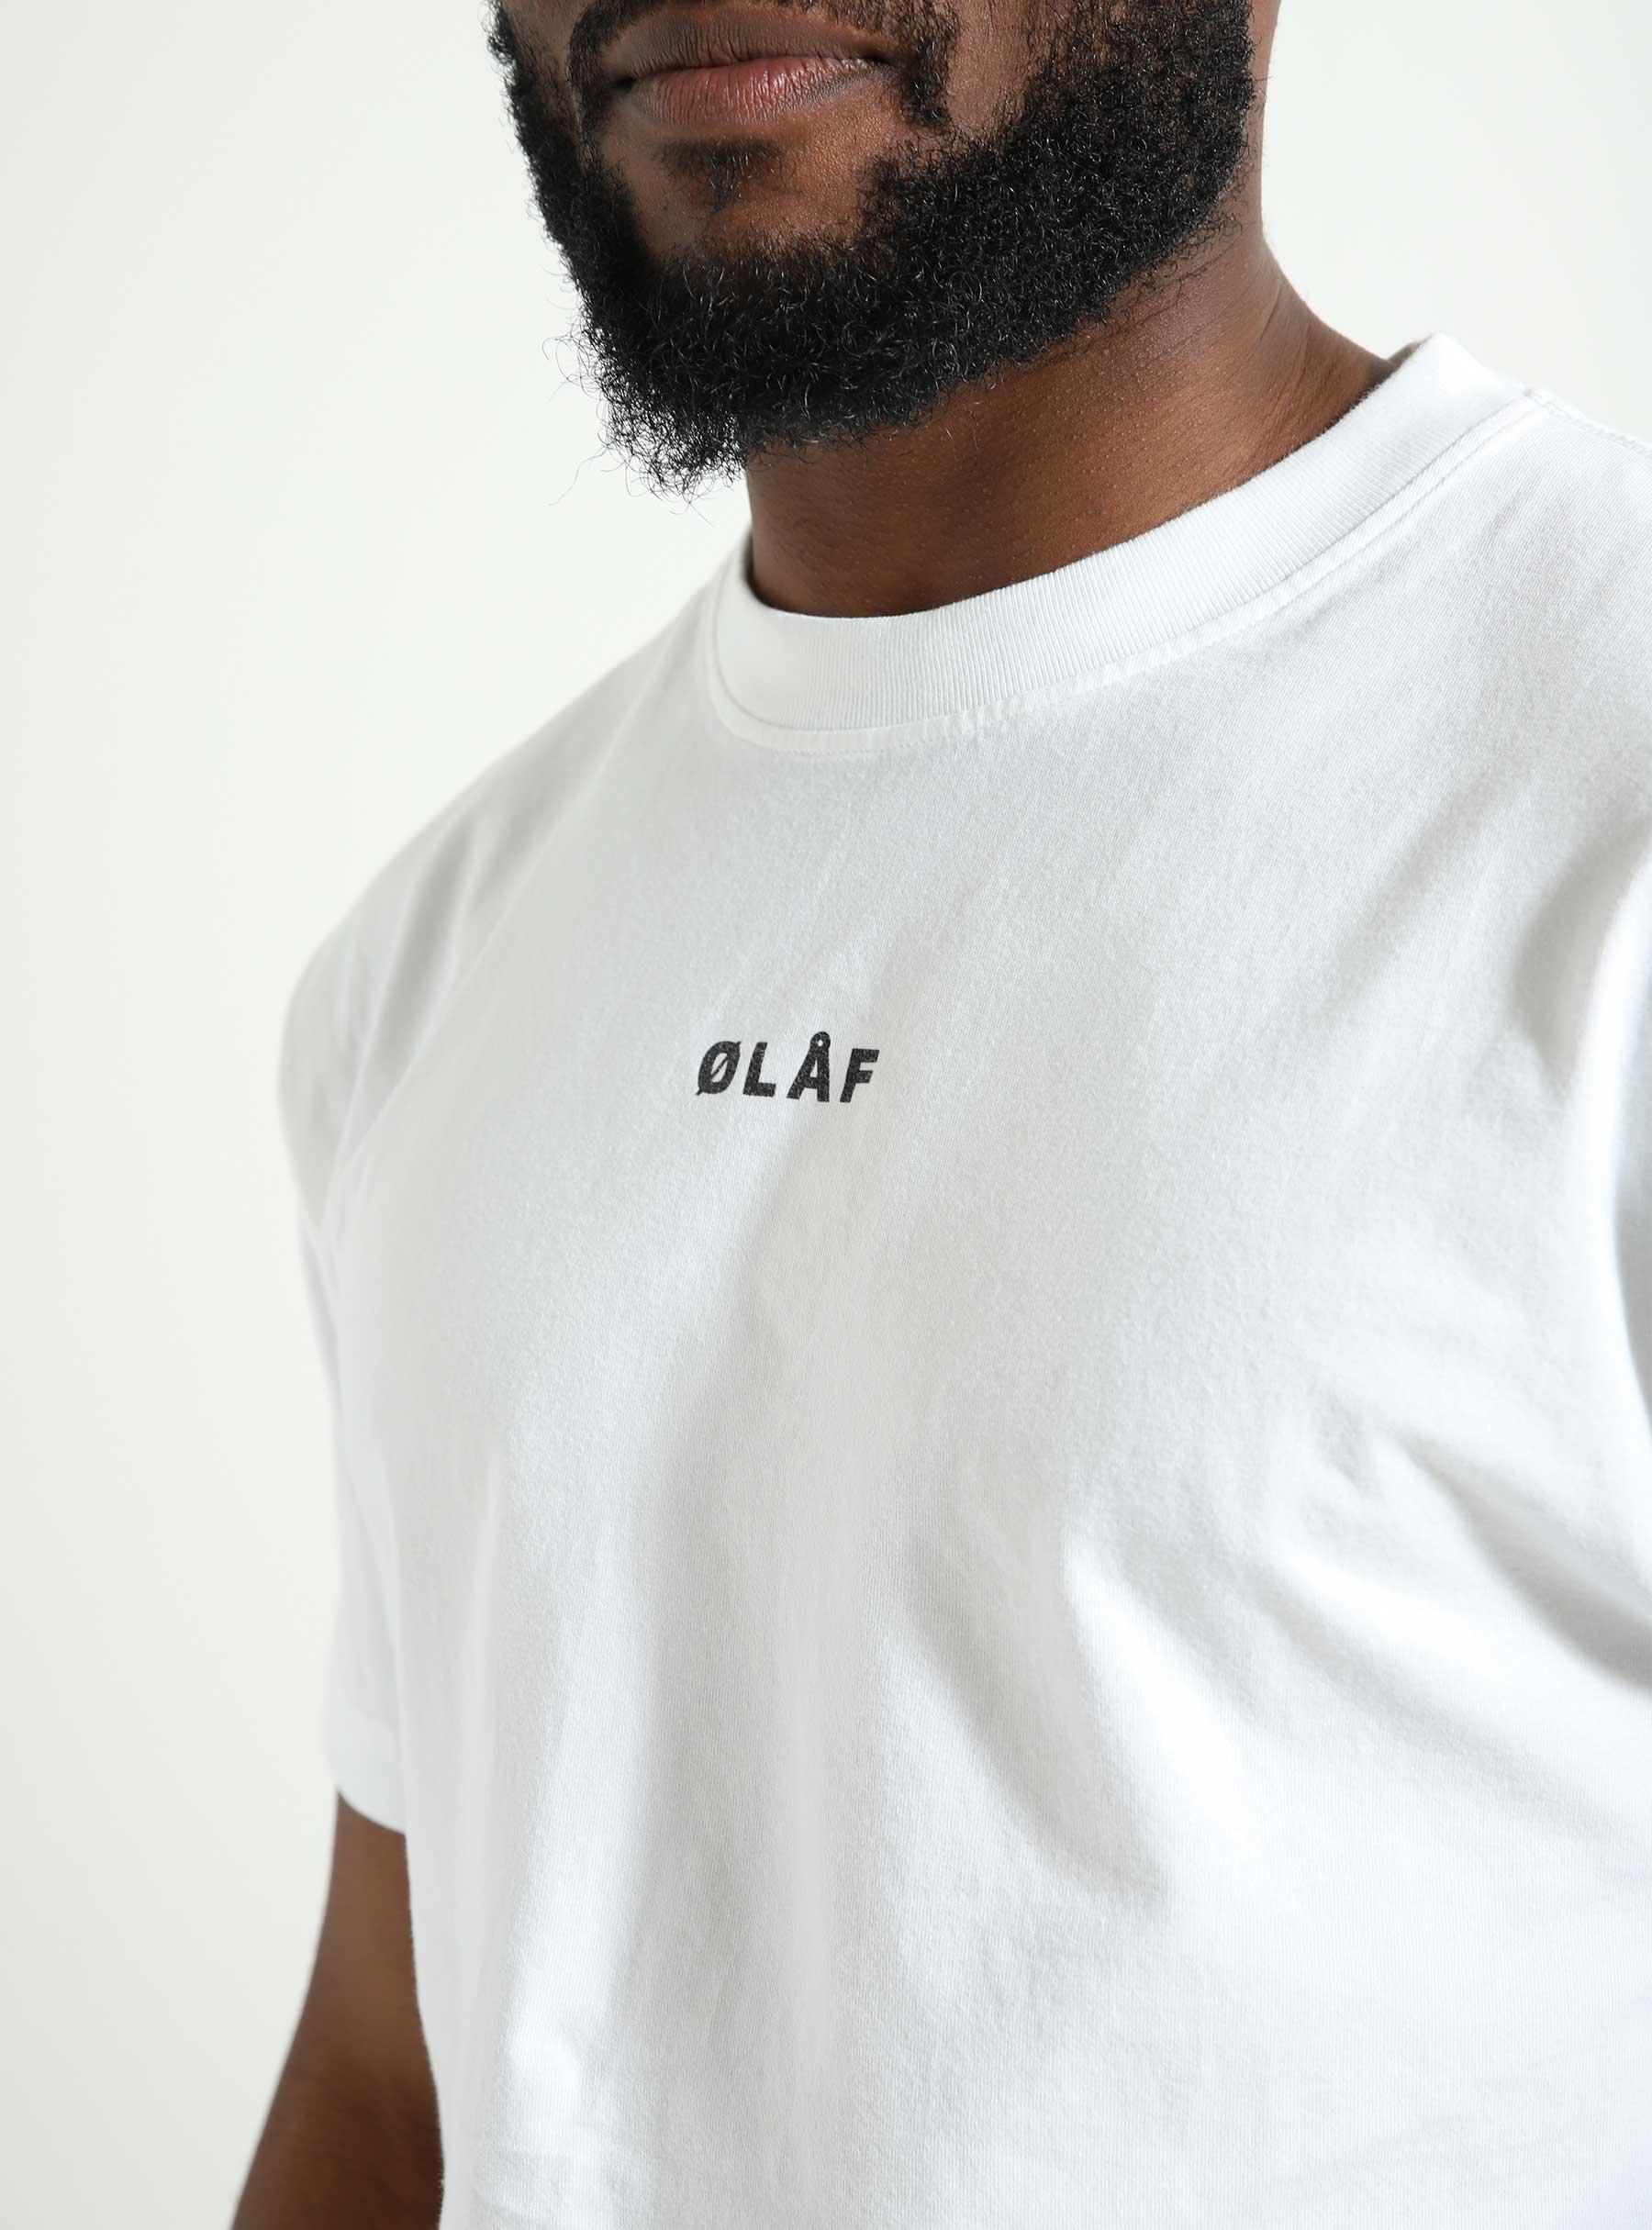 Olaf Block T-Shirt Optical White M990101